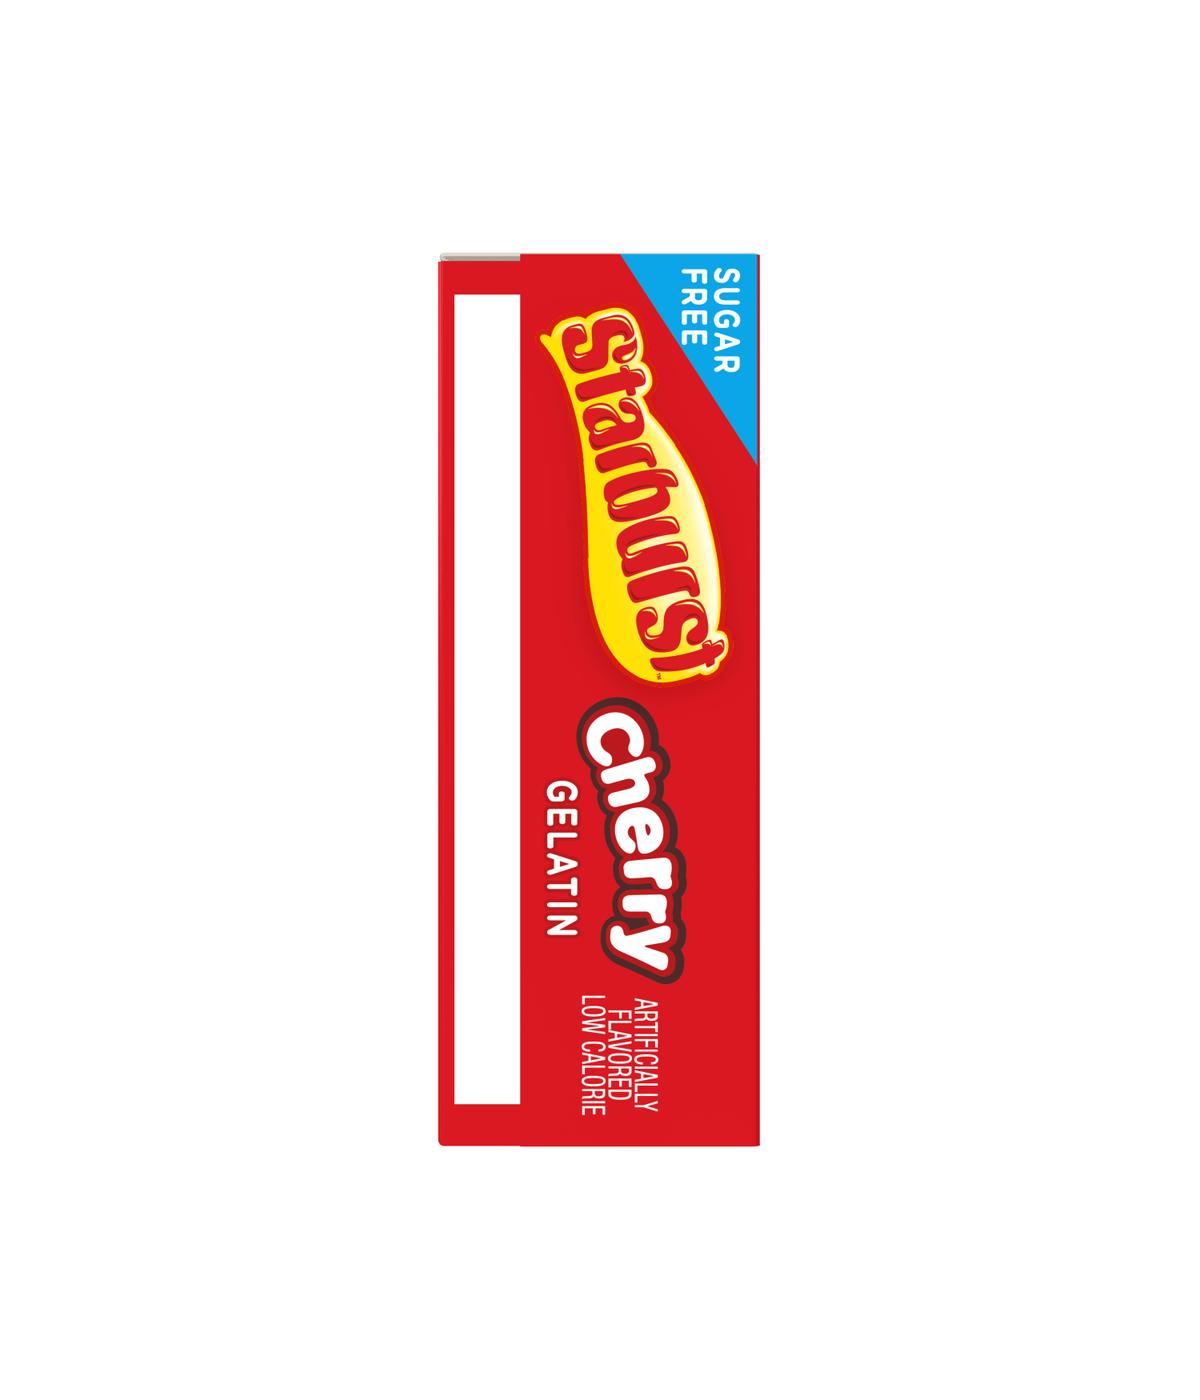 Starburst Gelatin - Sugar Free Cherry; image 3 of 3